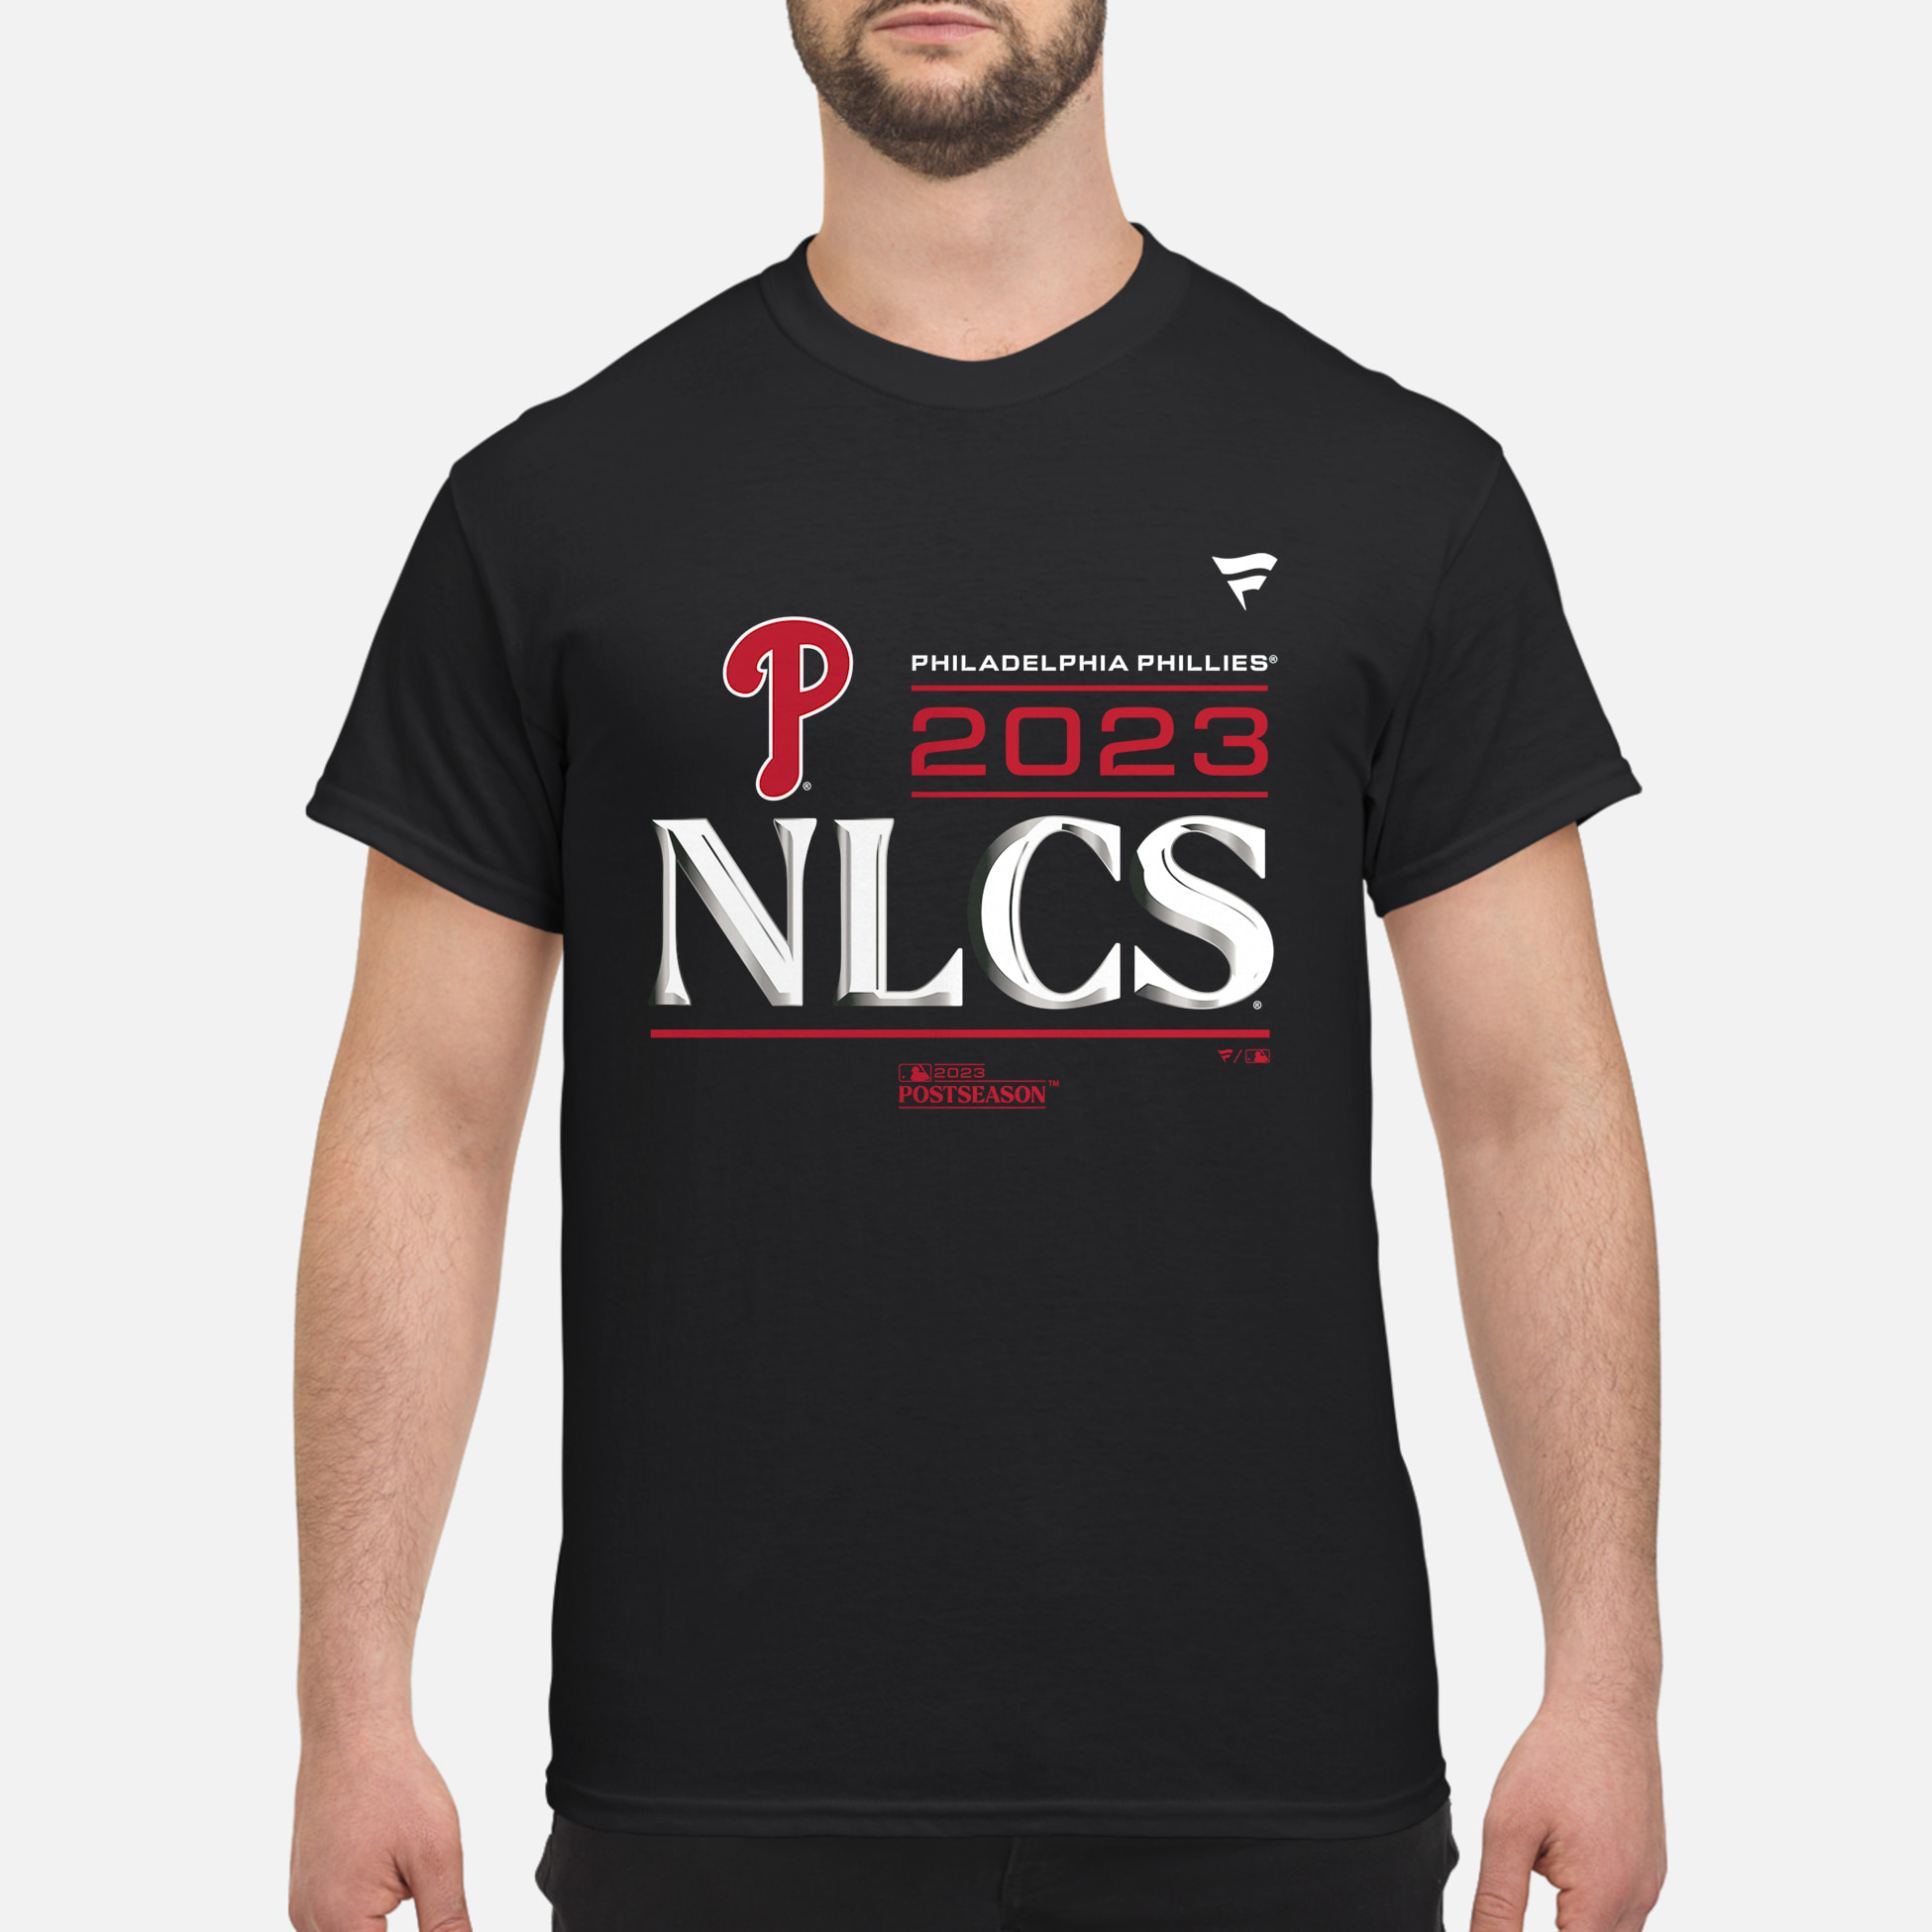 Phillies Nlcs Shirt